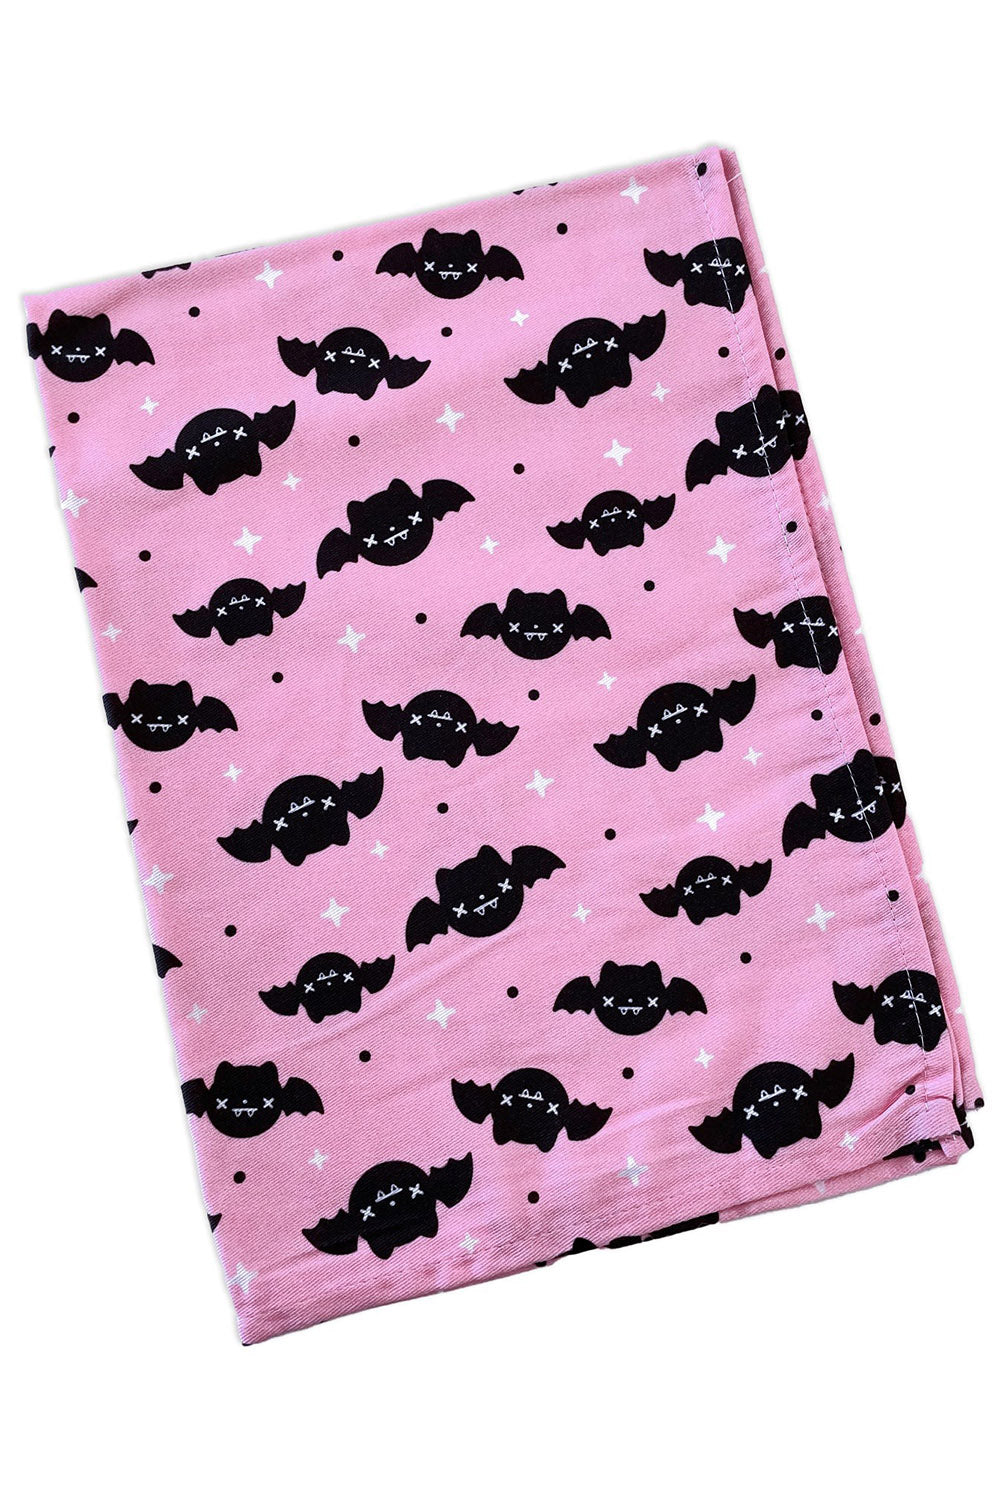 Pink Bats Kitchen Towel